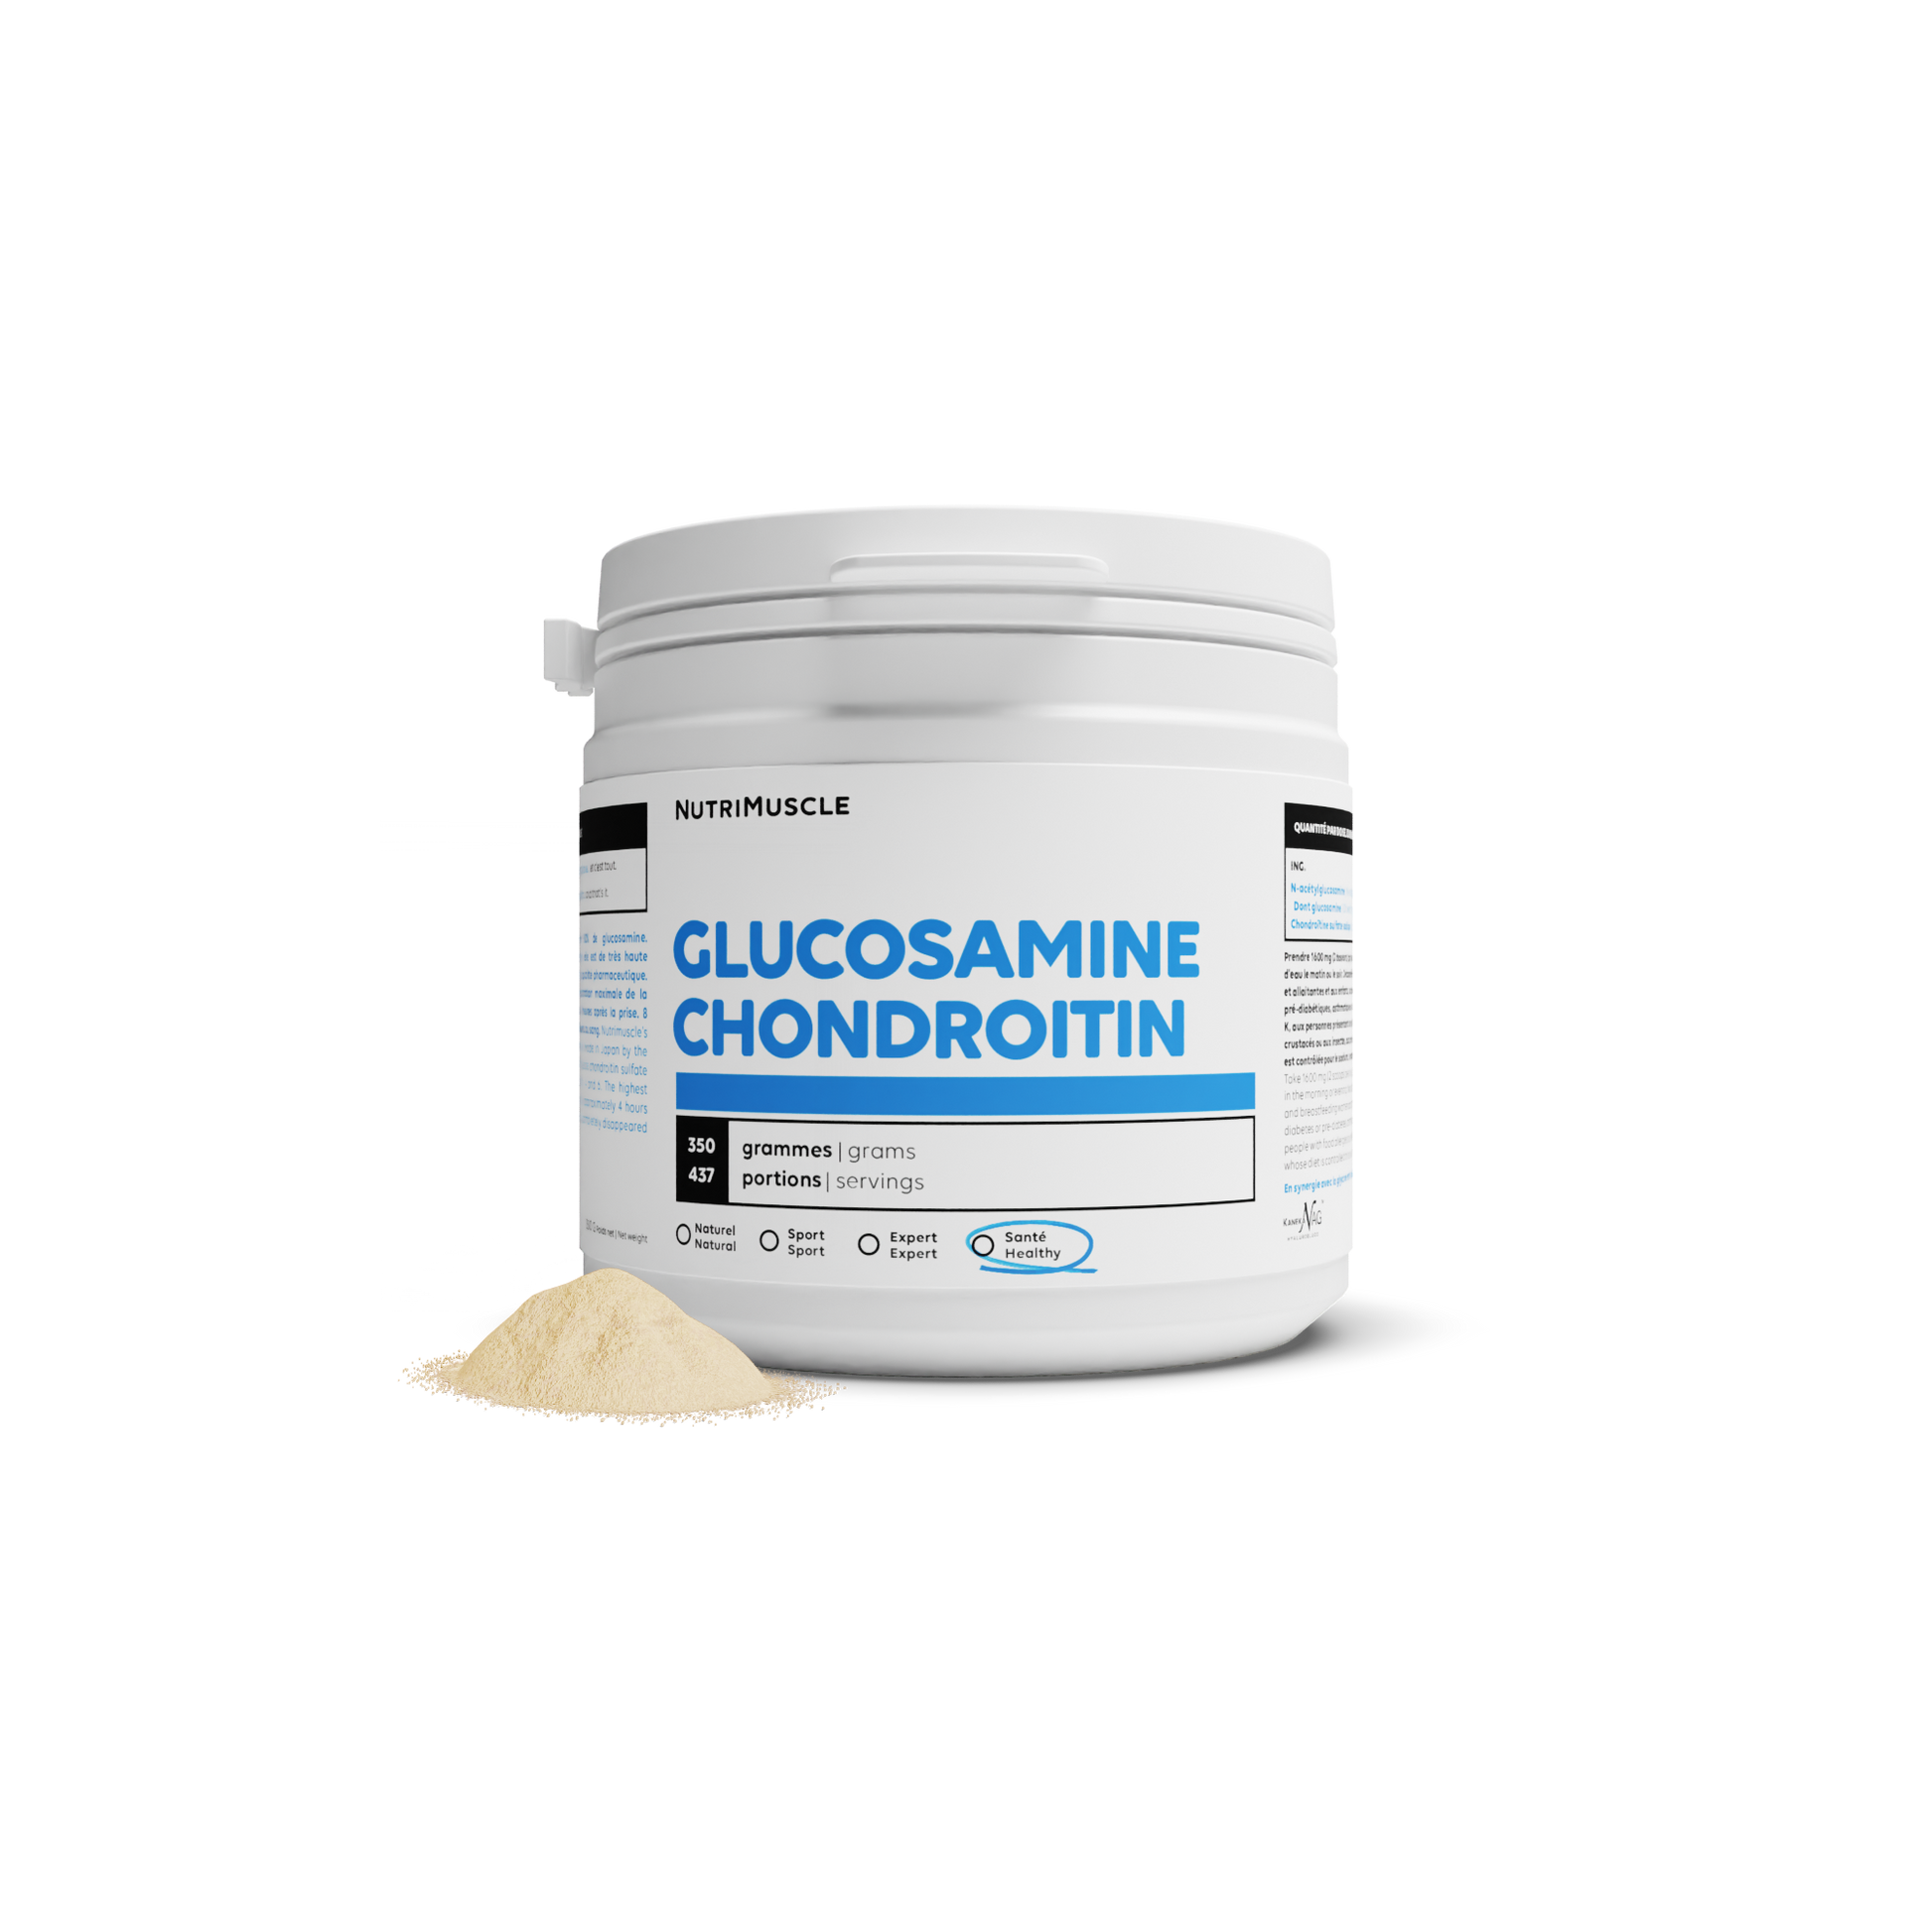 Mix glucosamine + chondroitin powder